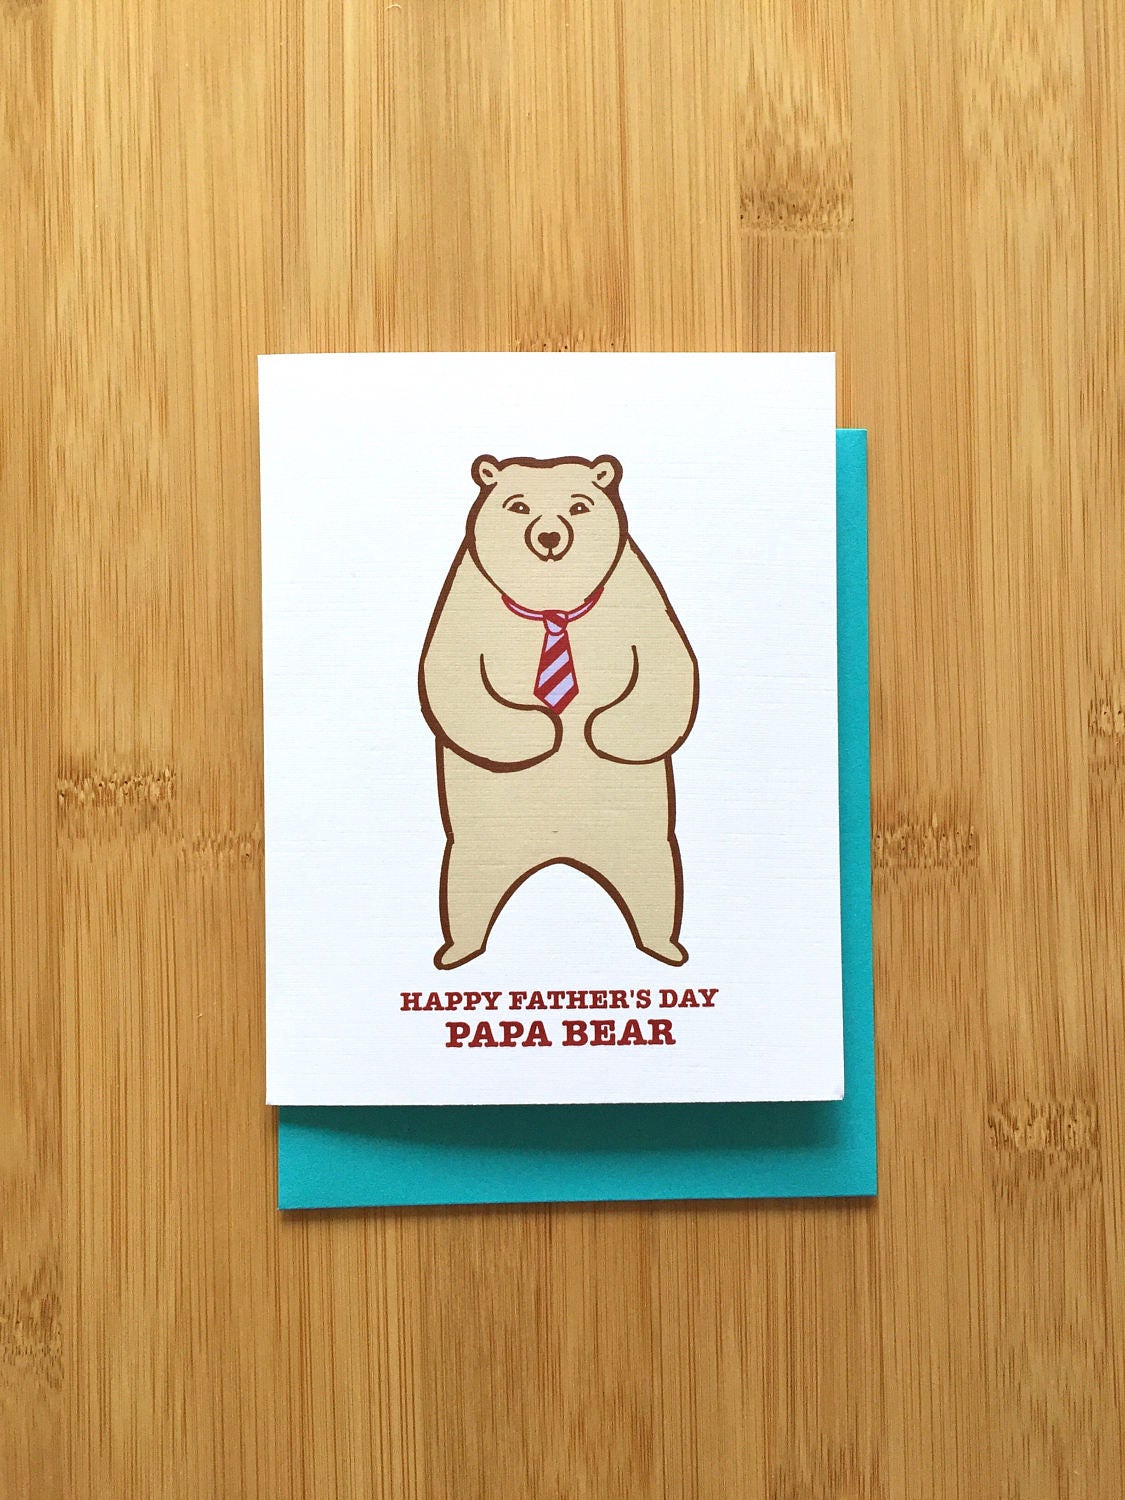 Papa Bear Fathers Day Card - Card for Dad, Grizzly Bear Dad Card, Teddy Bear Card